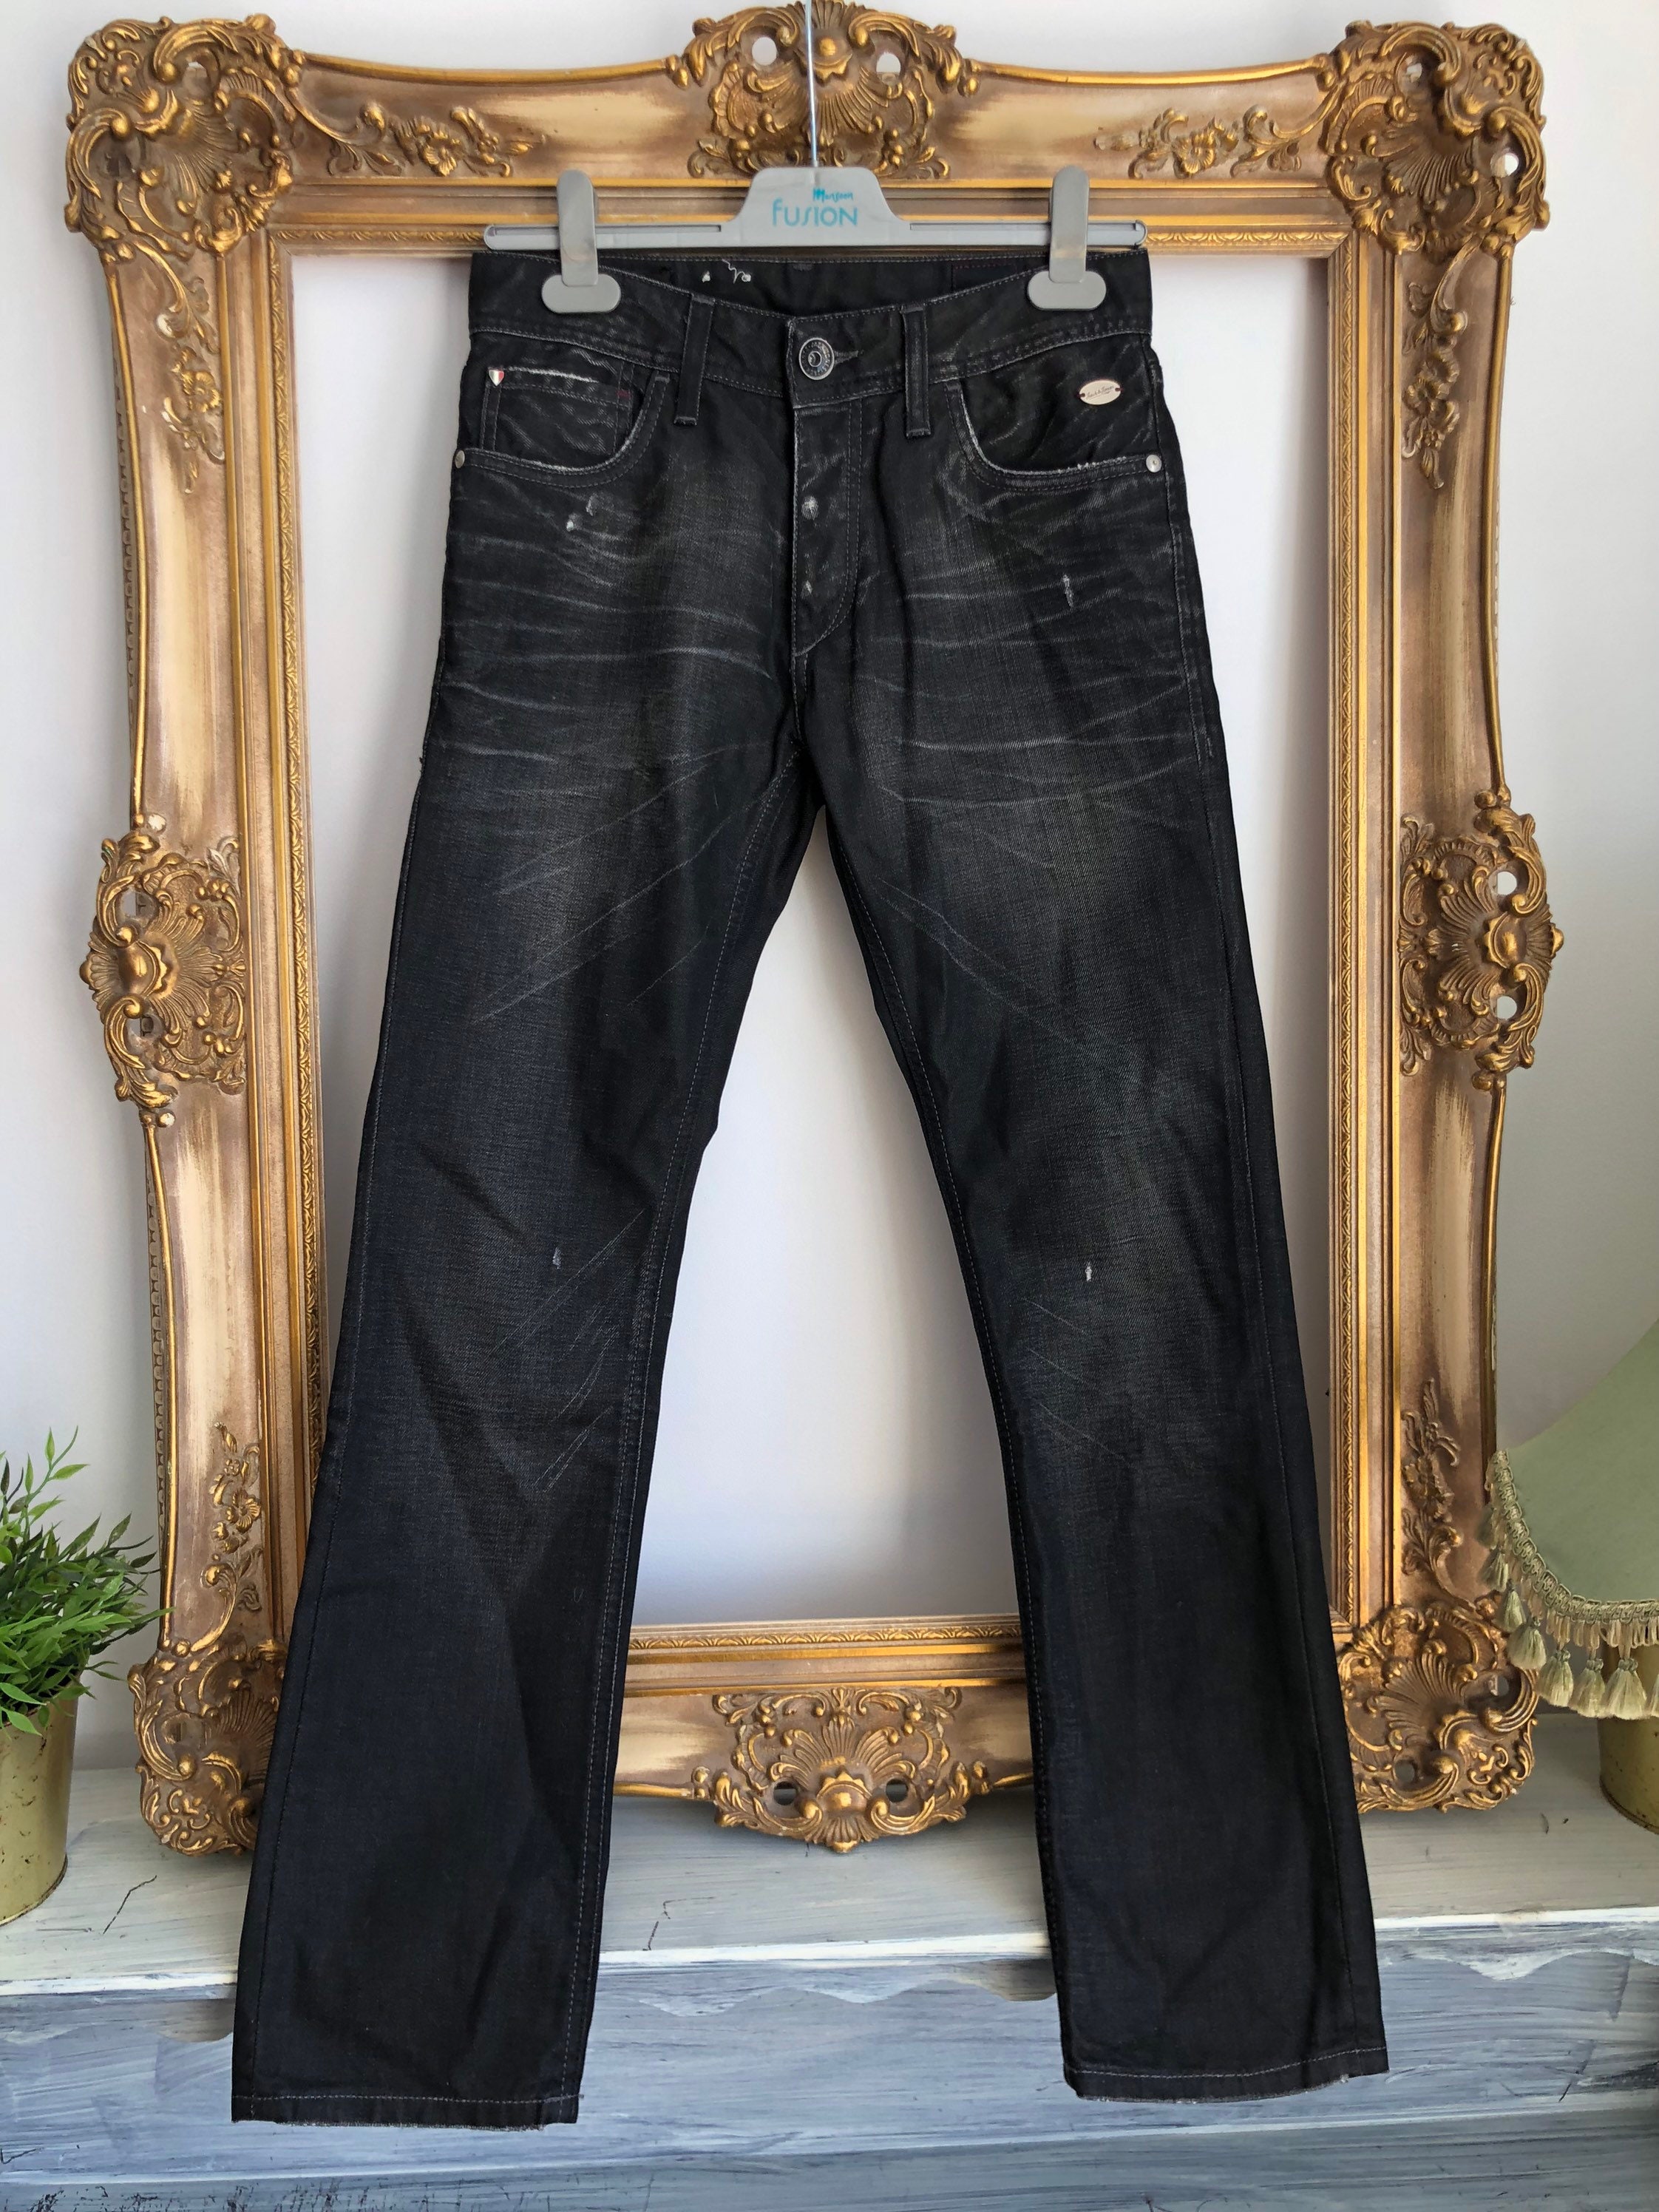 JACK & JONES Blue Mild Distressed High Rise Regular Fit Jeans [36] in  Bangalore at best price by Vero Moda Jack Jones - Justdial